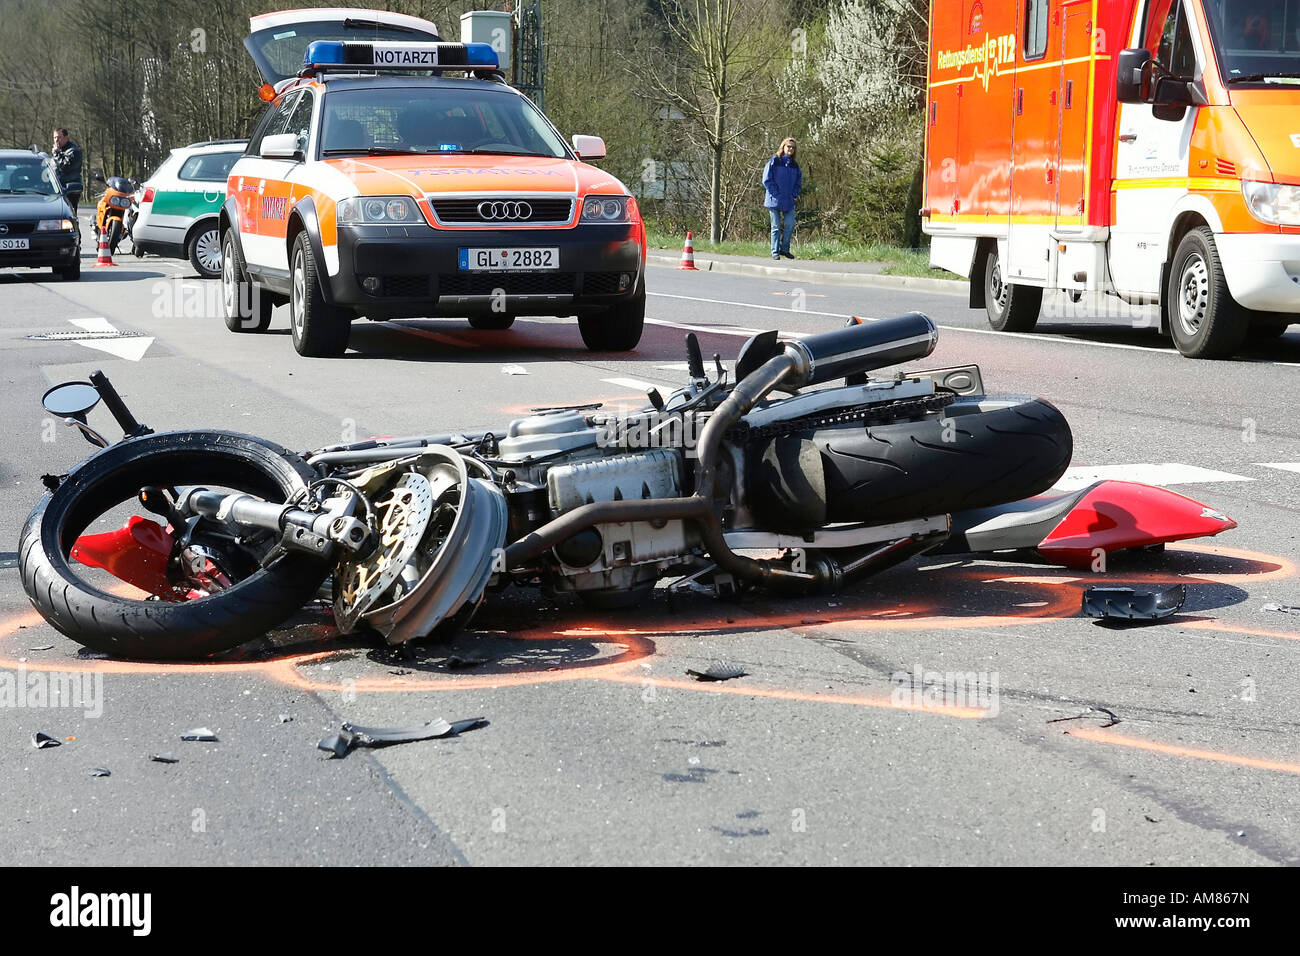 Motorcycle accident Stock Photo